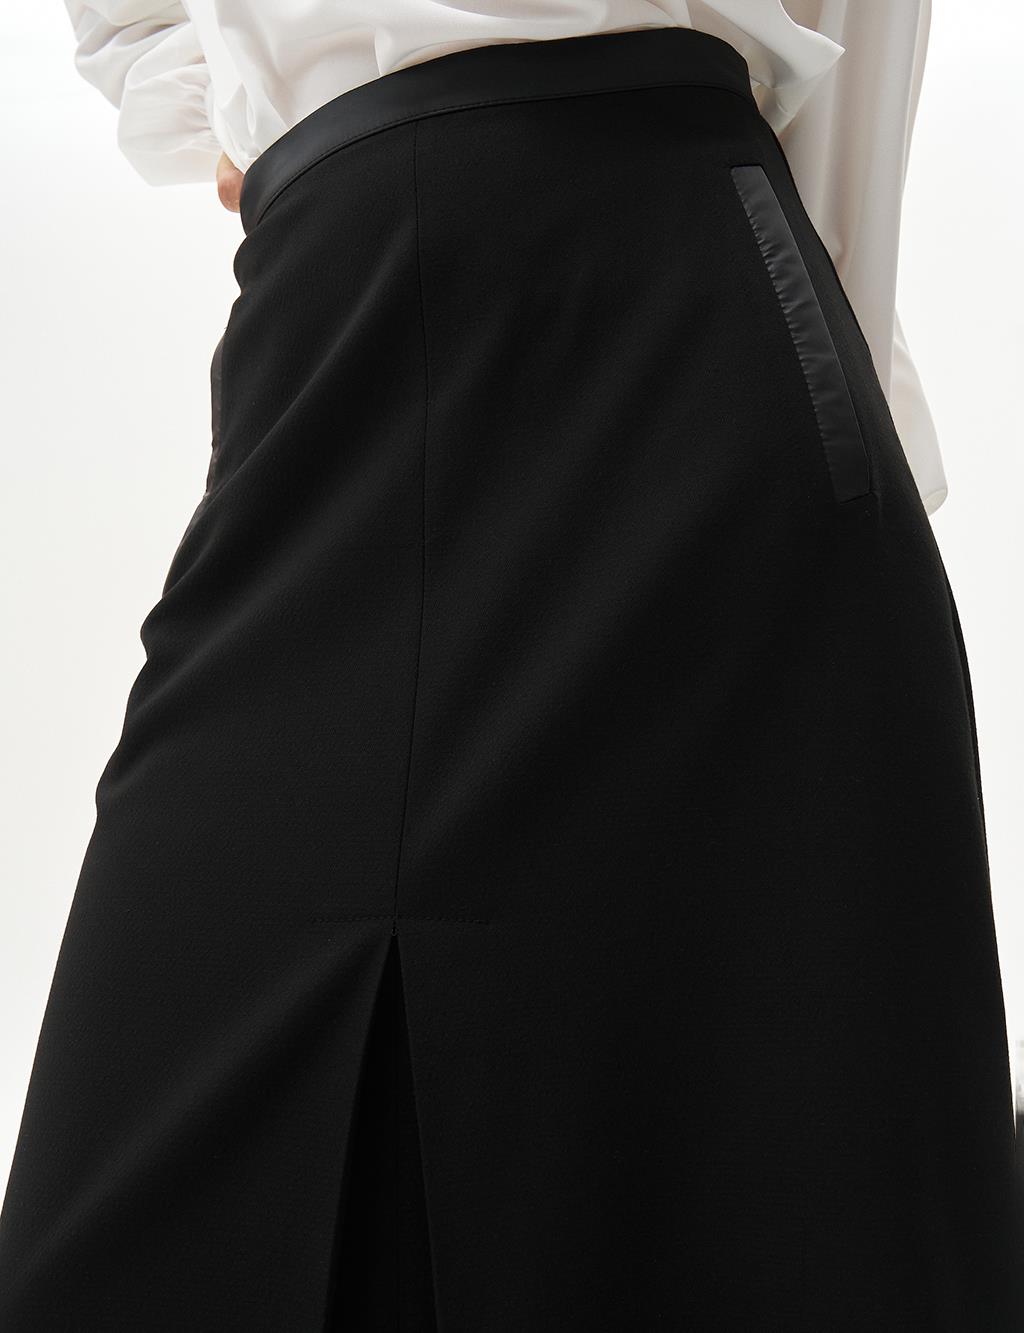 Garnished Pleated A-Line Skirt Black